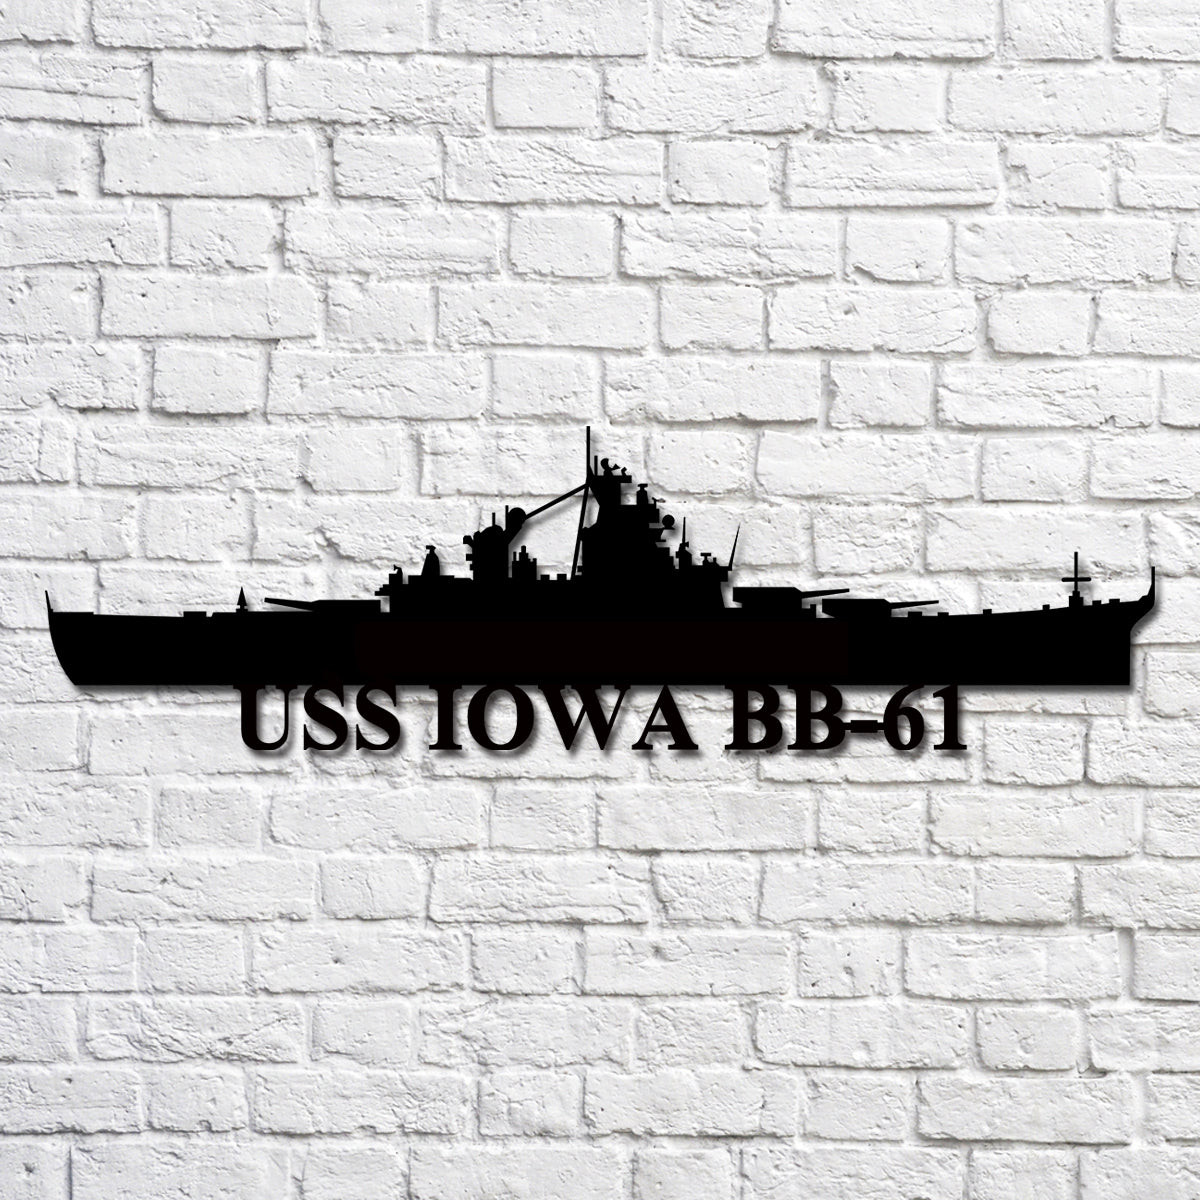 Uss Iowa Bb61 V2 Navy Ship Metal Art, Custom Us Navy Ship Cut Metal Sign, Gift For Navy Veteran, Navy Ships Silhouette Metal Art, Navy Home Decor Laser Cut Metal Signs Custom Gift Ideas 12x12IN